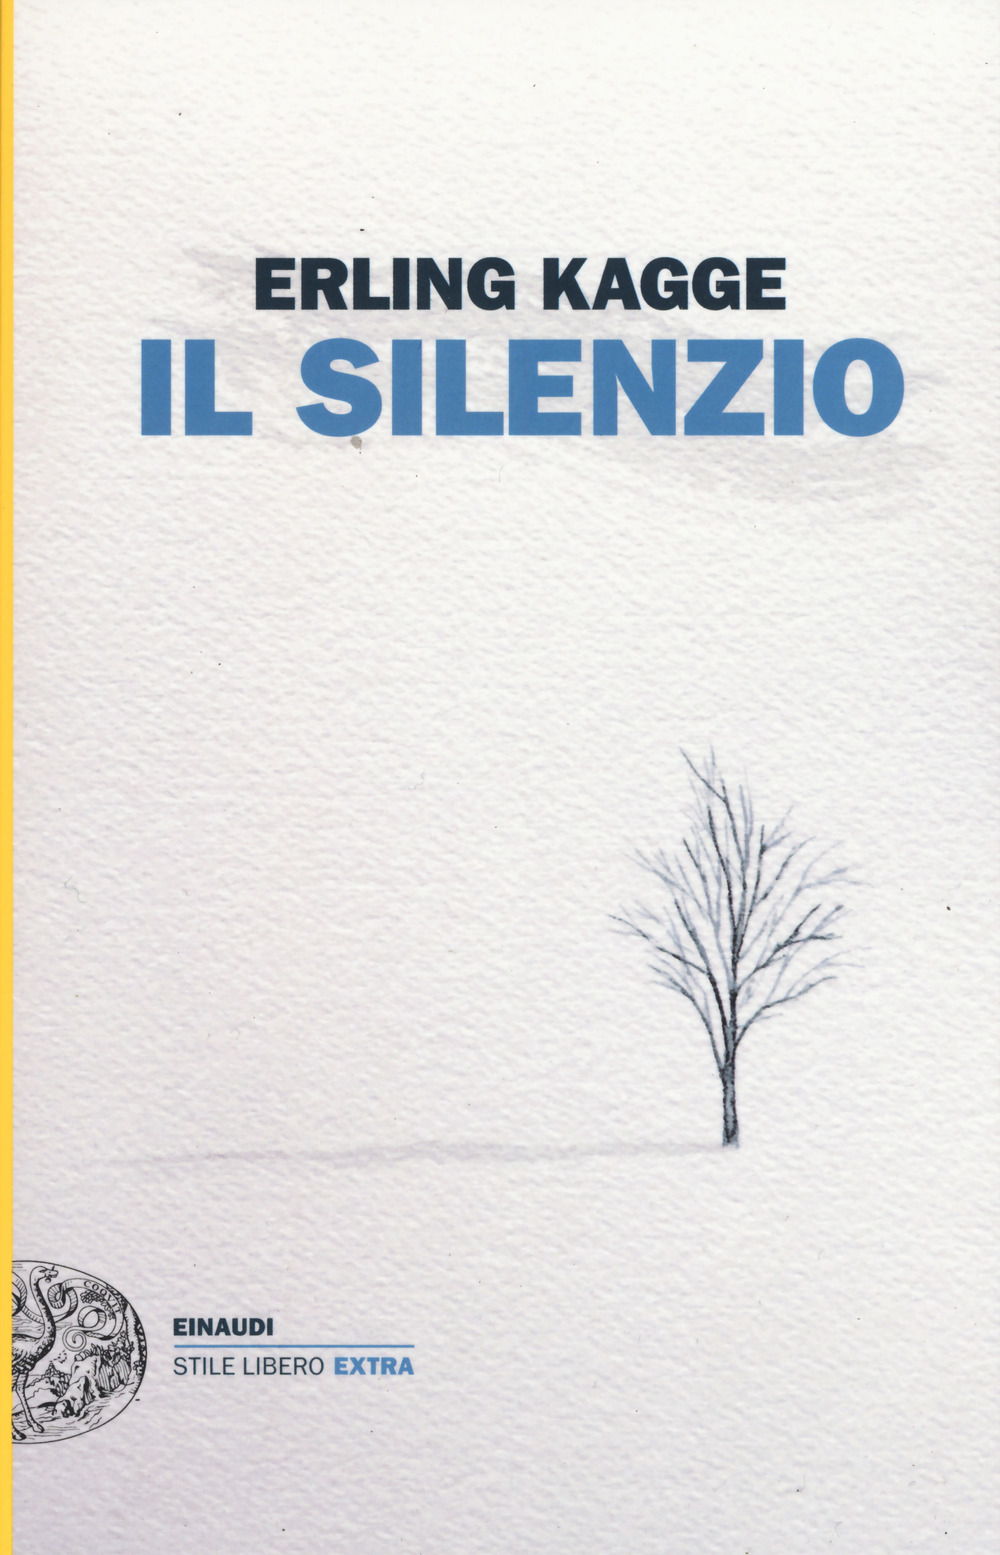 Il silenzio, Erling Kagge, Einaudi